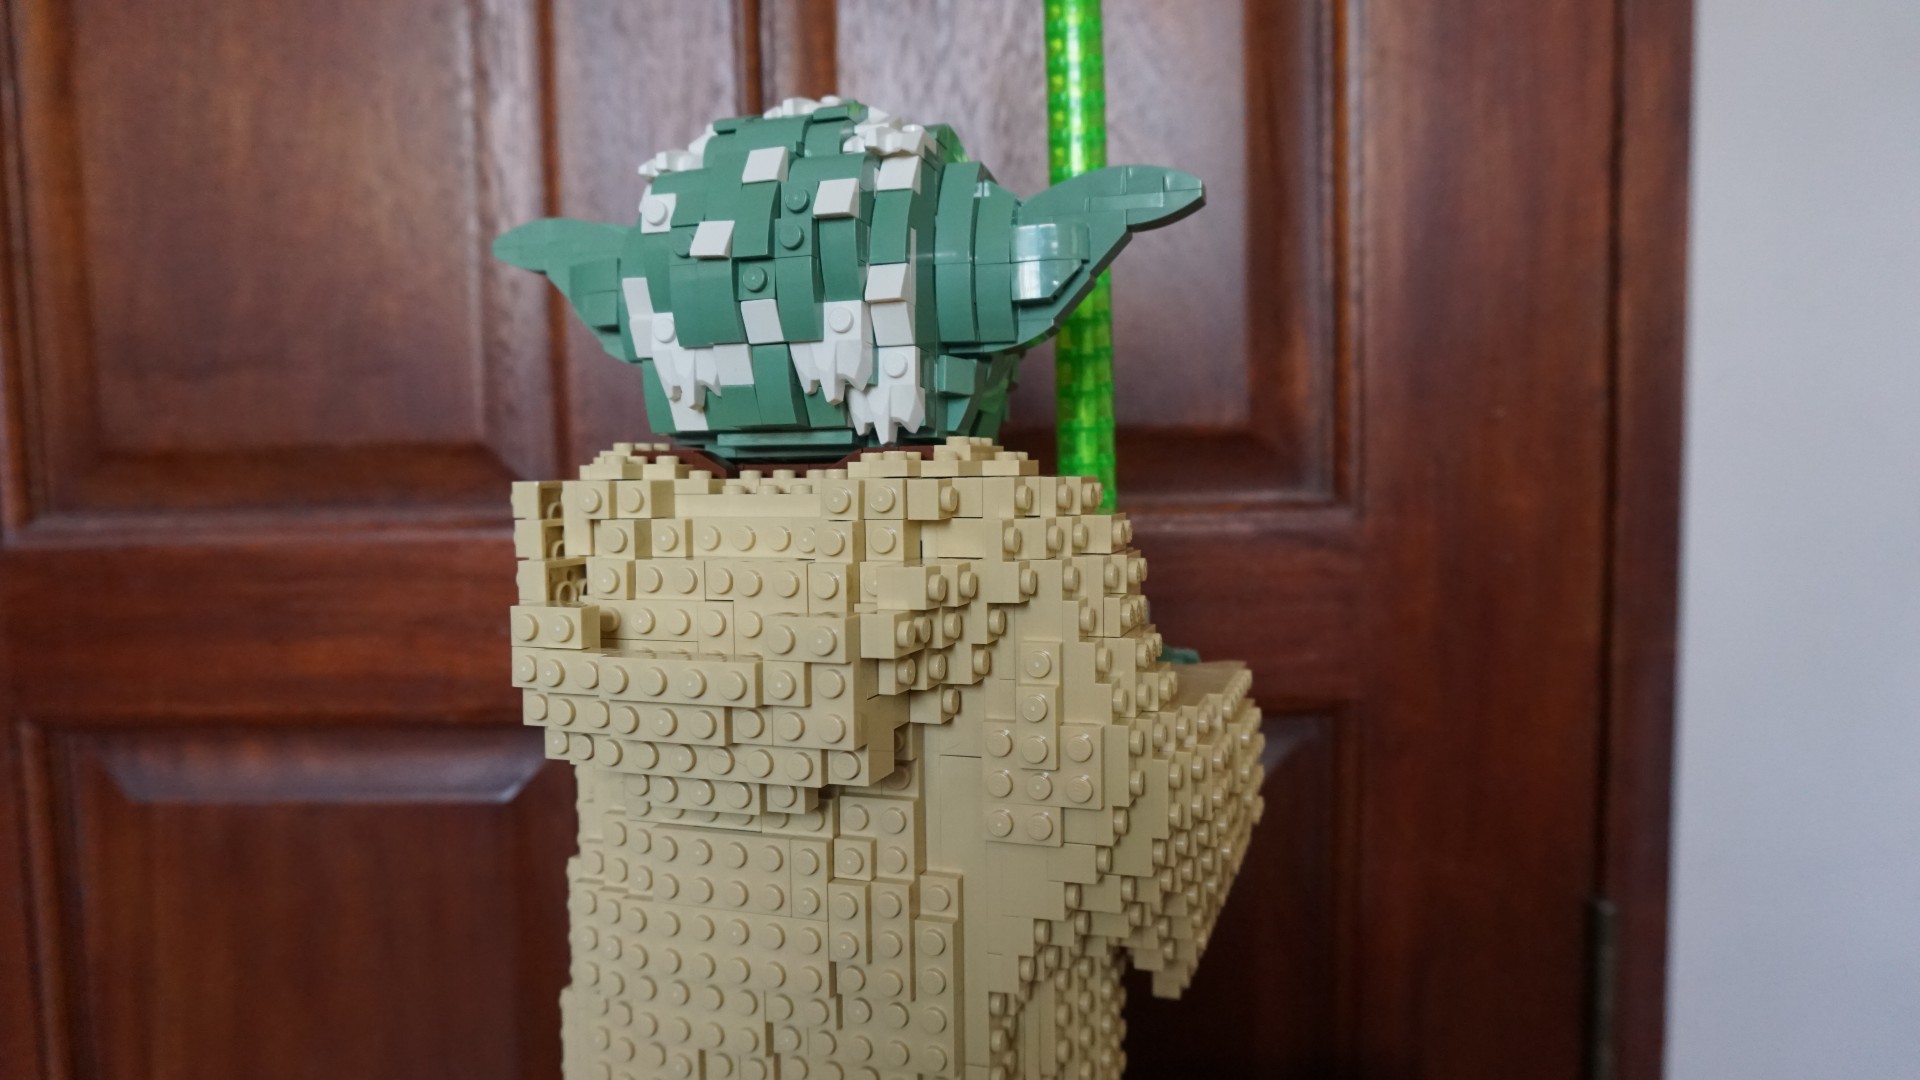 Lego Star Wars Yoda_full model from behind_Kimberley Snaith